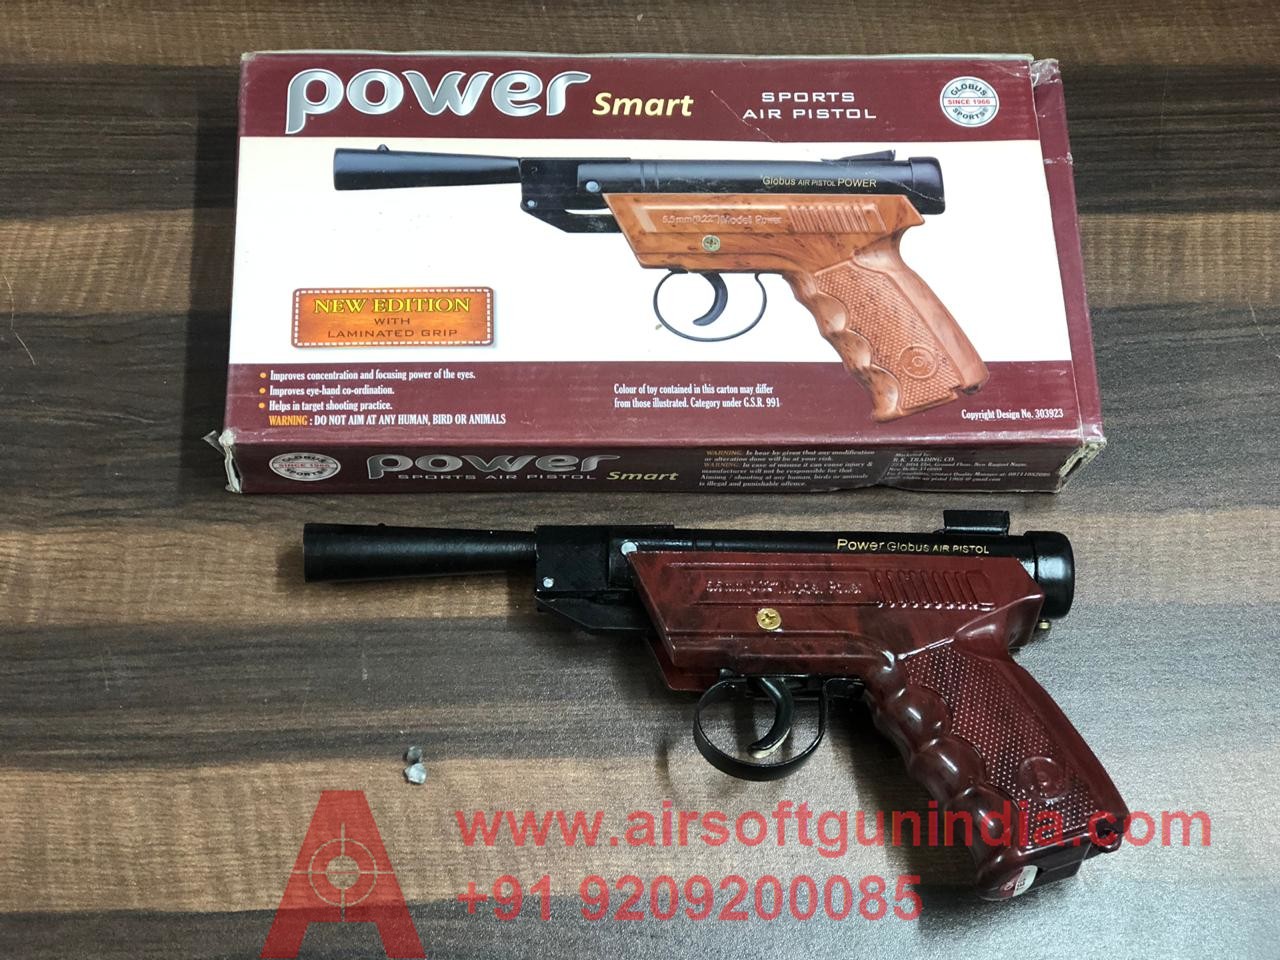 Power Sports Air Pistol By Airsoft Gun India Rose Texture